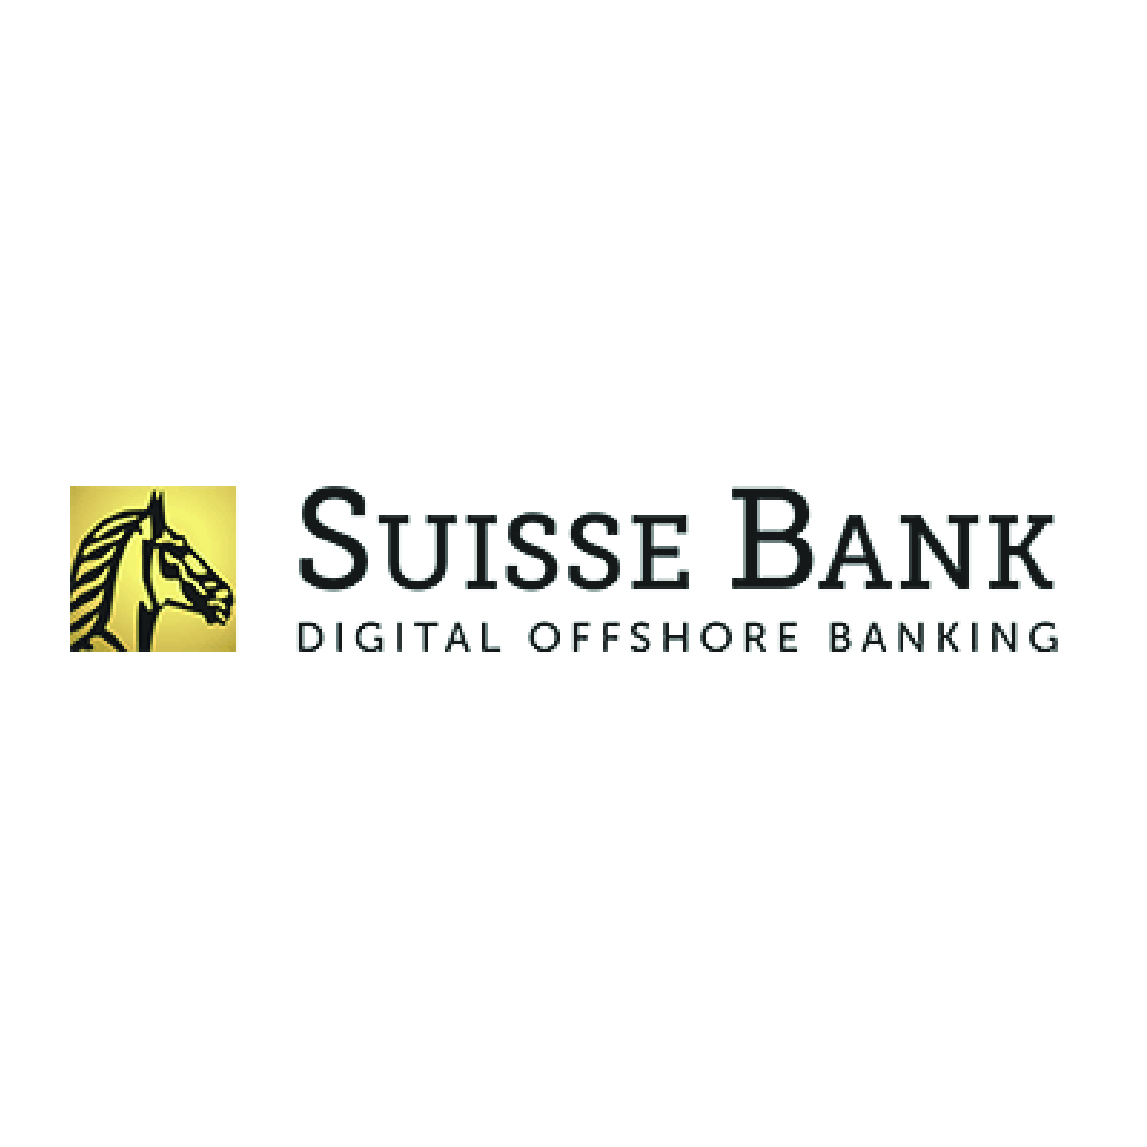 SUISSE BANK